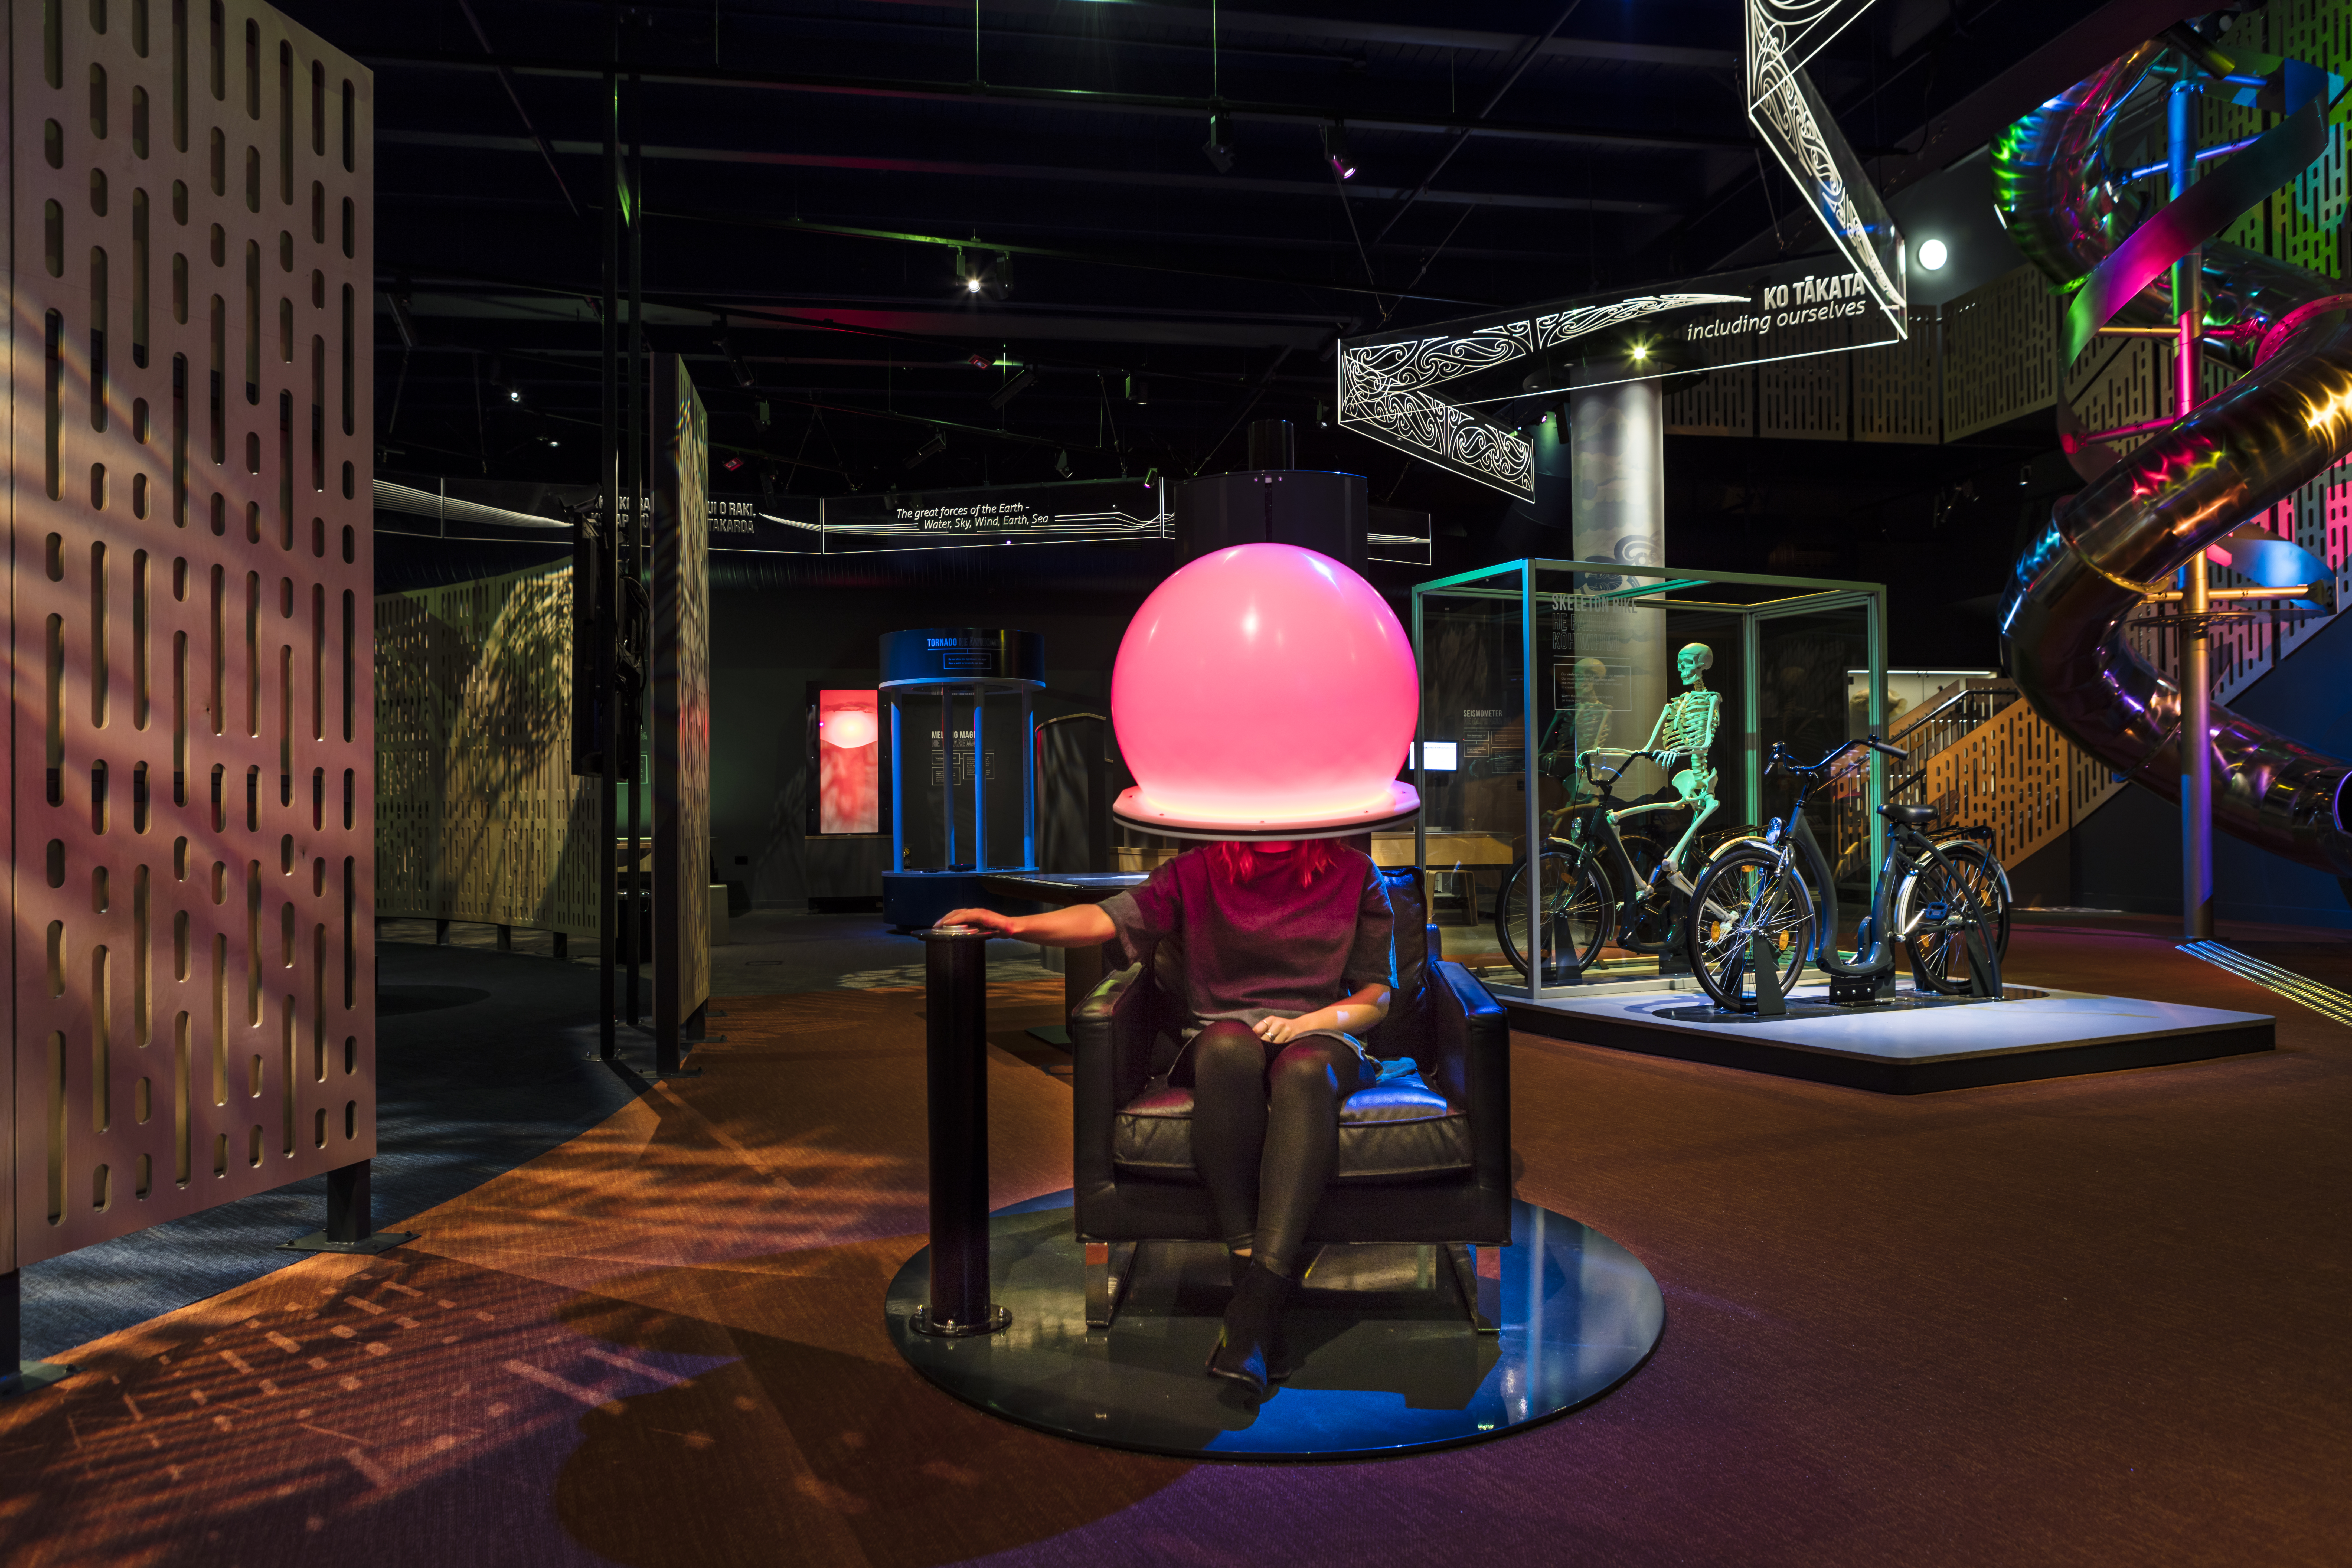 Interactive museum exhibits